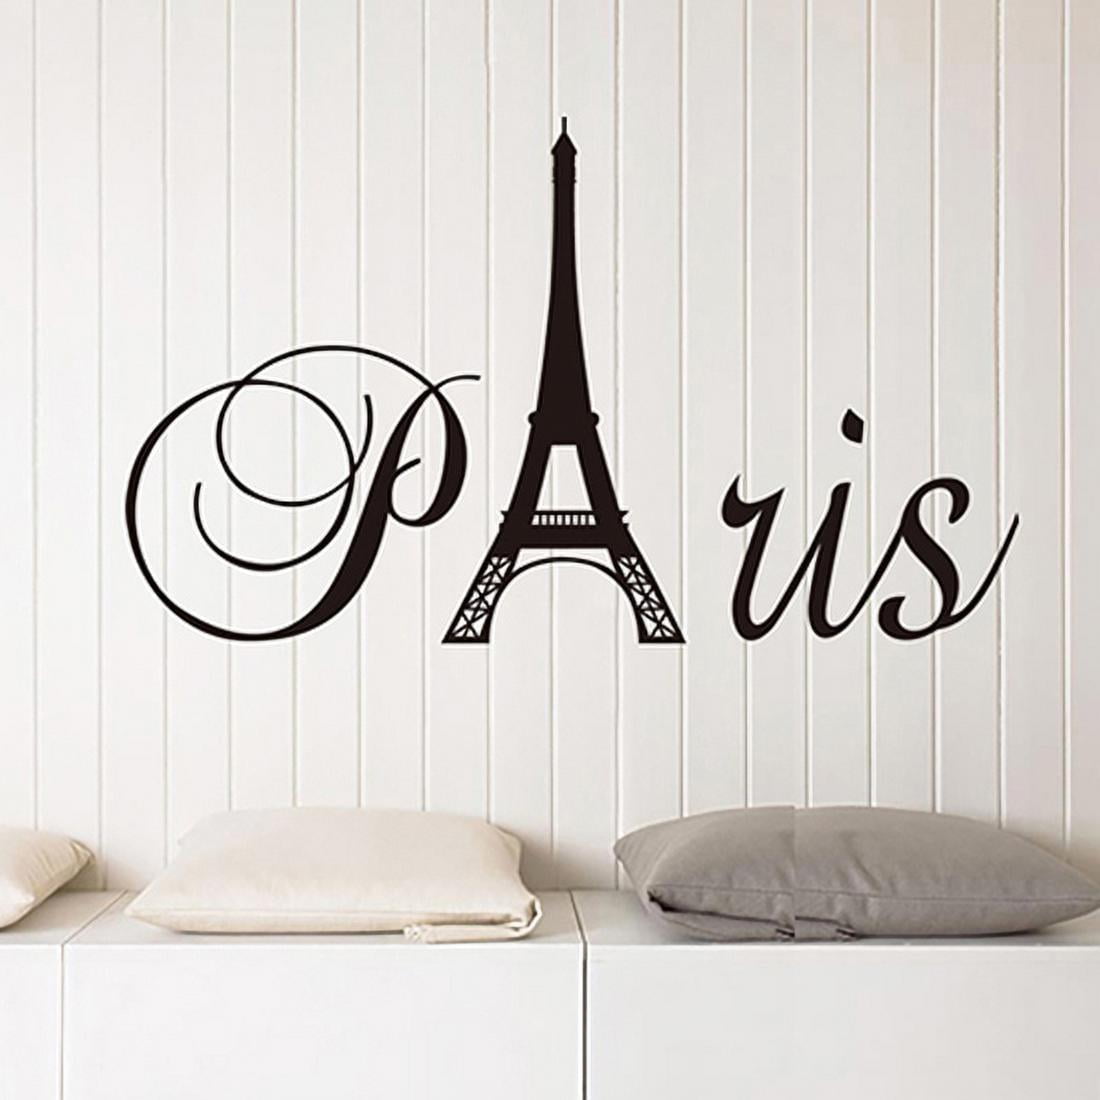 Wall Vinyl Sticker Room Decals Mural Design Paris France Eiffel Tower bo1179 